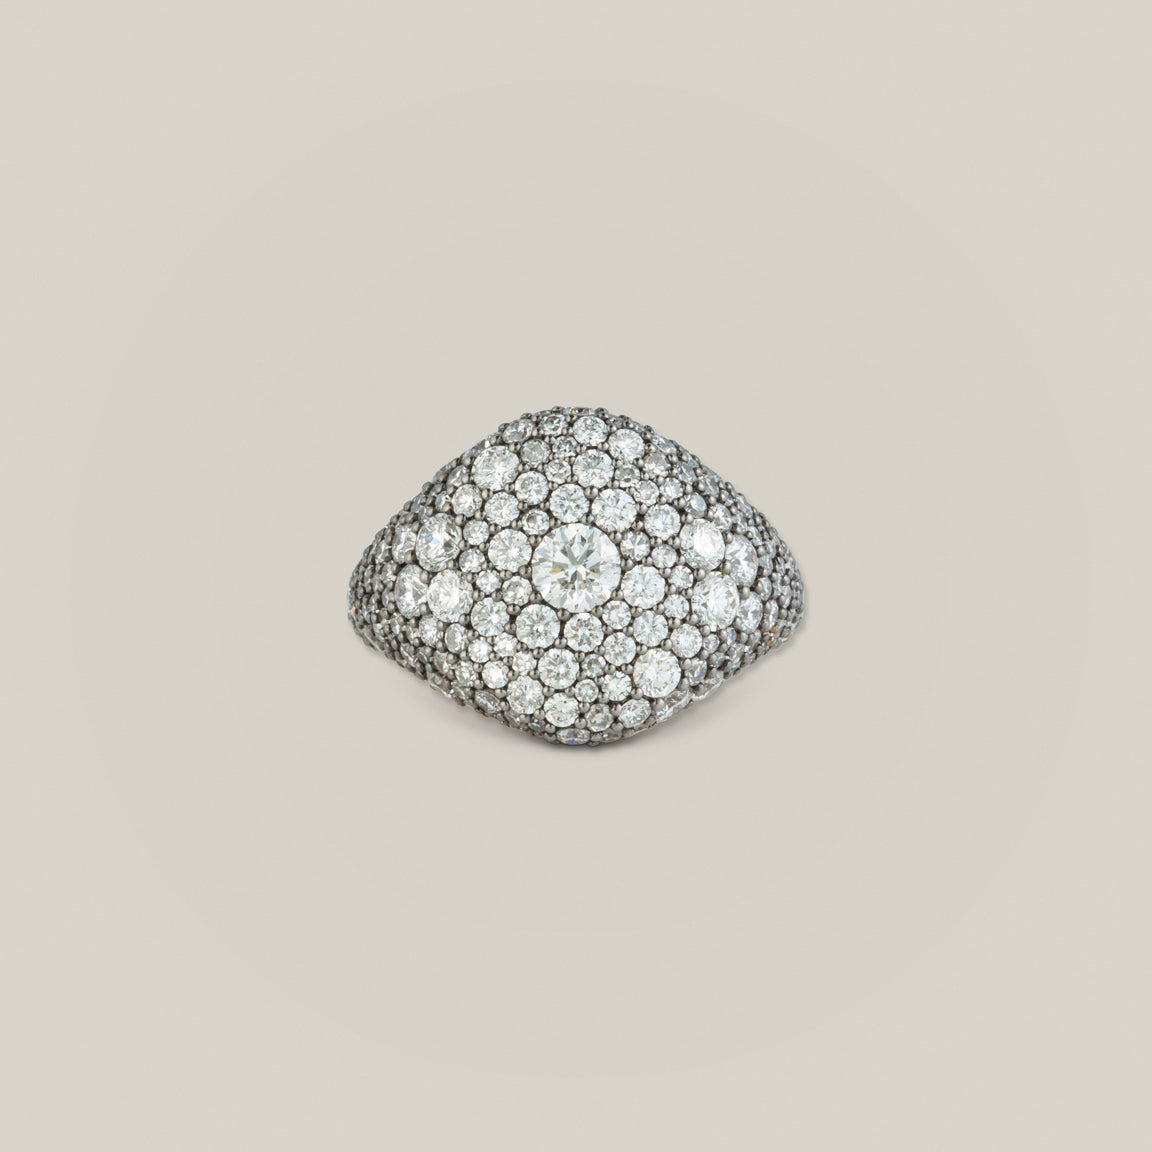 Antique Finish Victorian Set Diamond Pavé Signet Ring